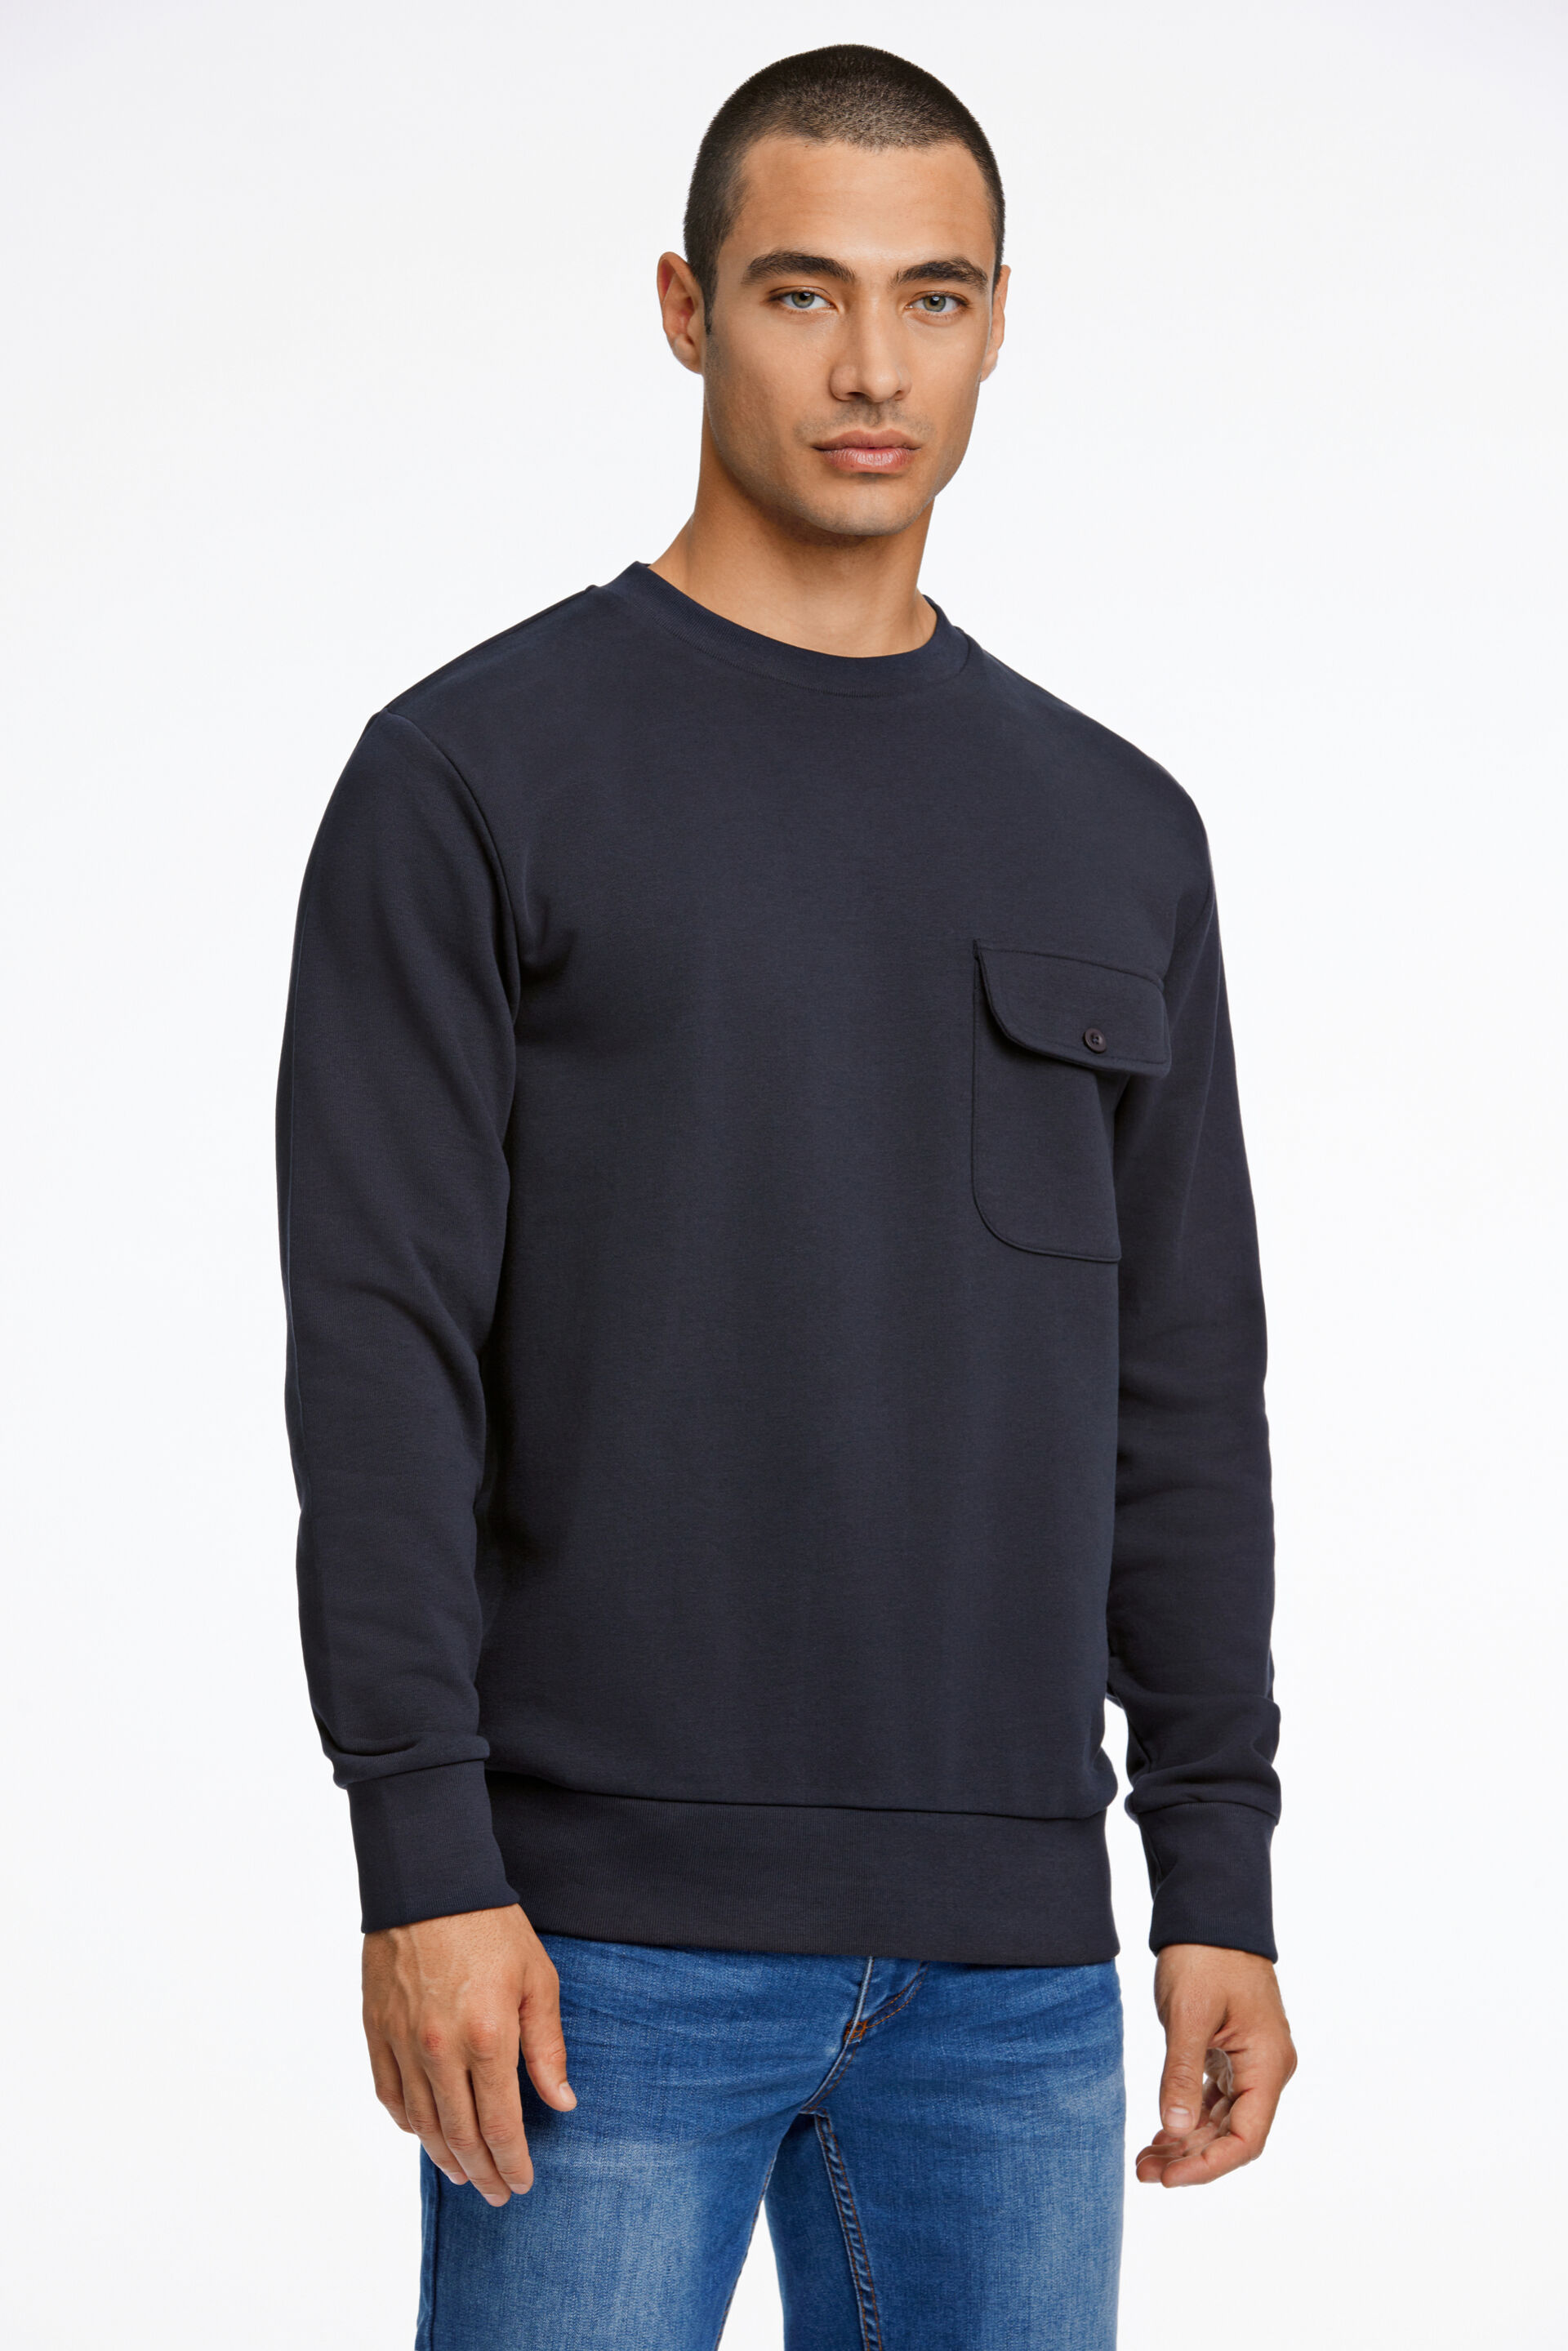 Sweater Sweater Blauw 30-705151